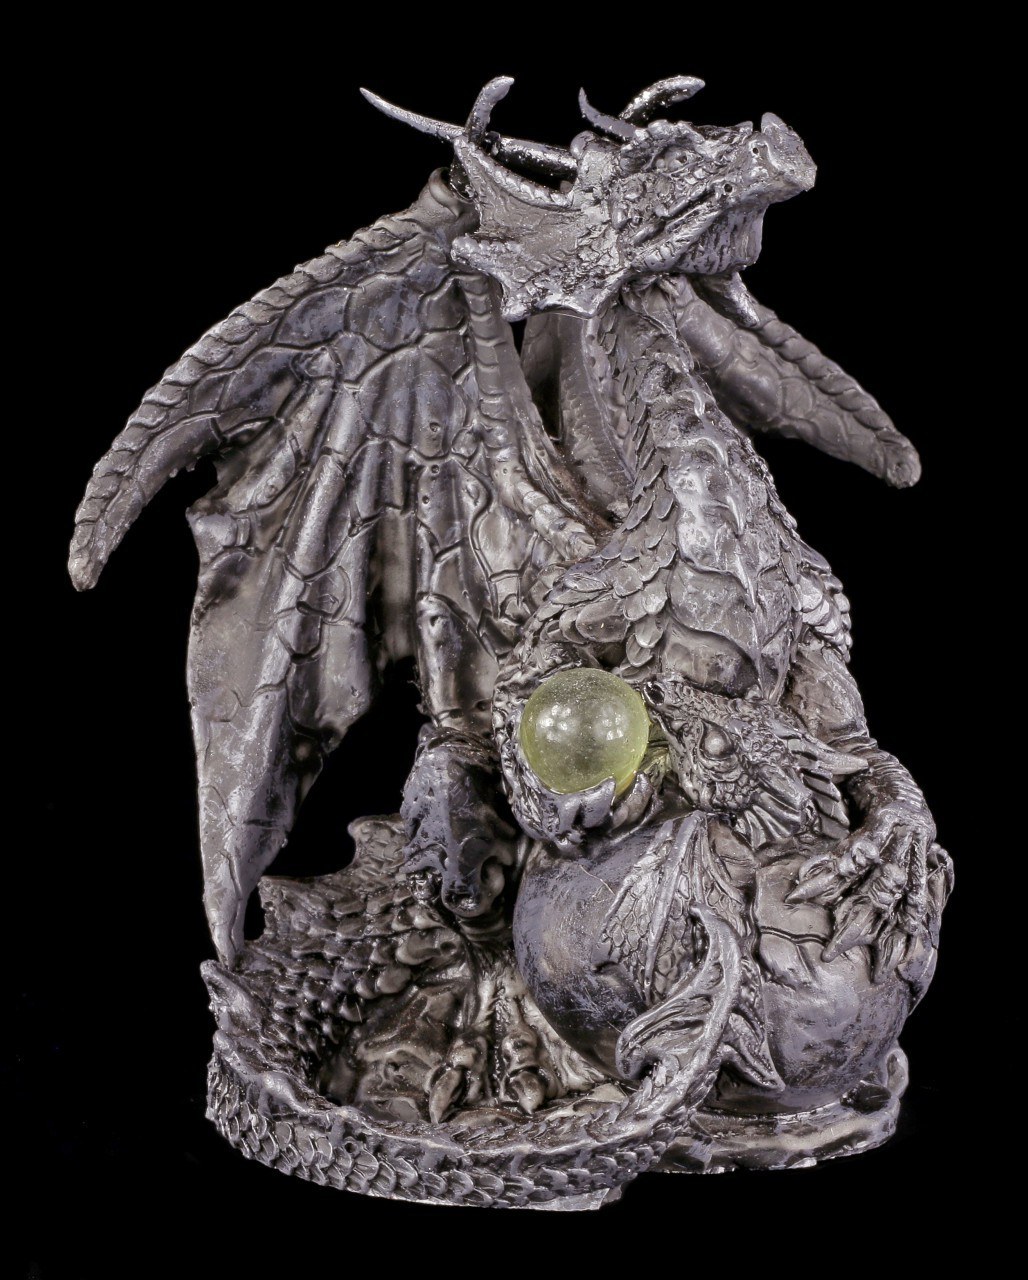 Dragon Figurine with Baby and Glass Ball